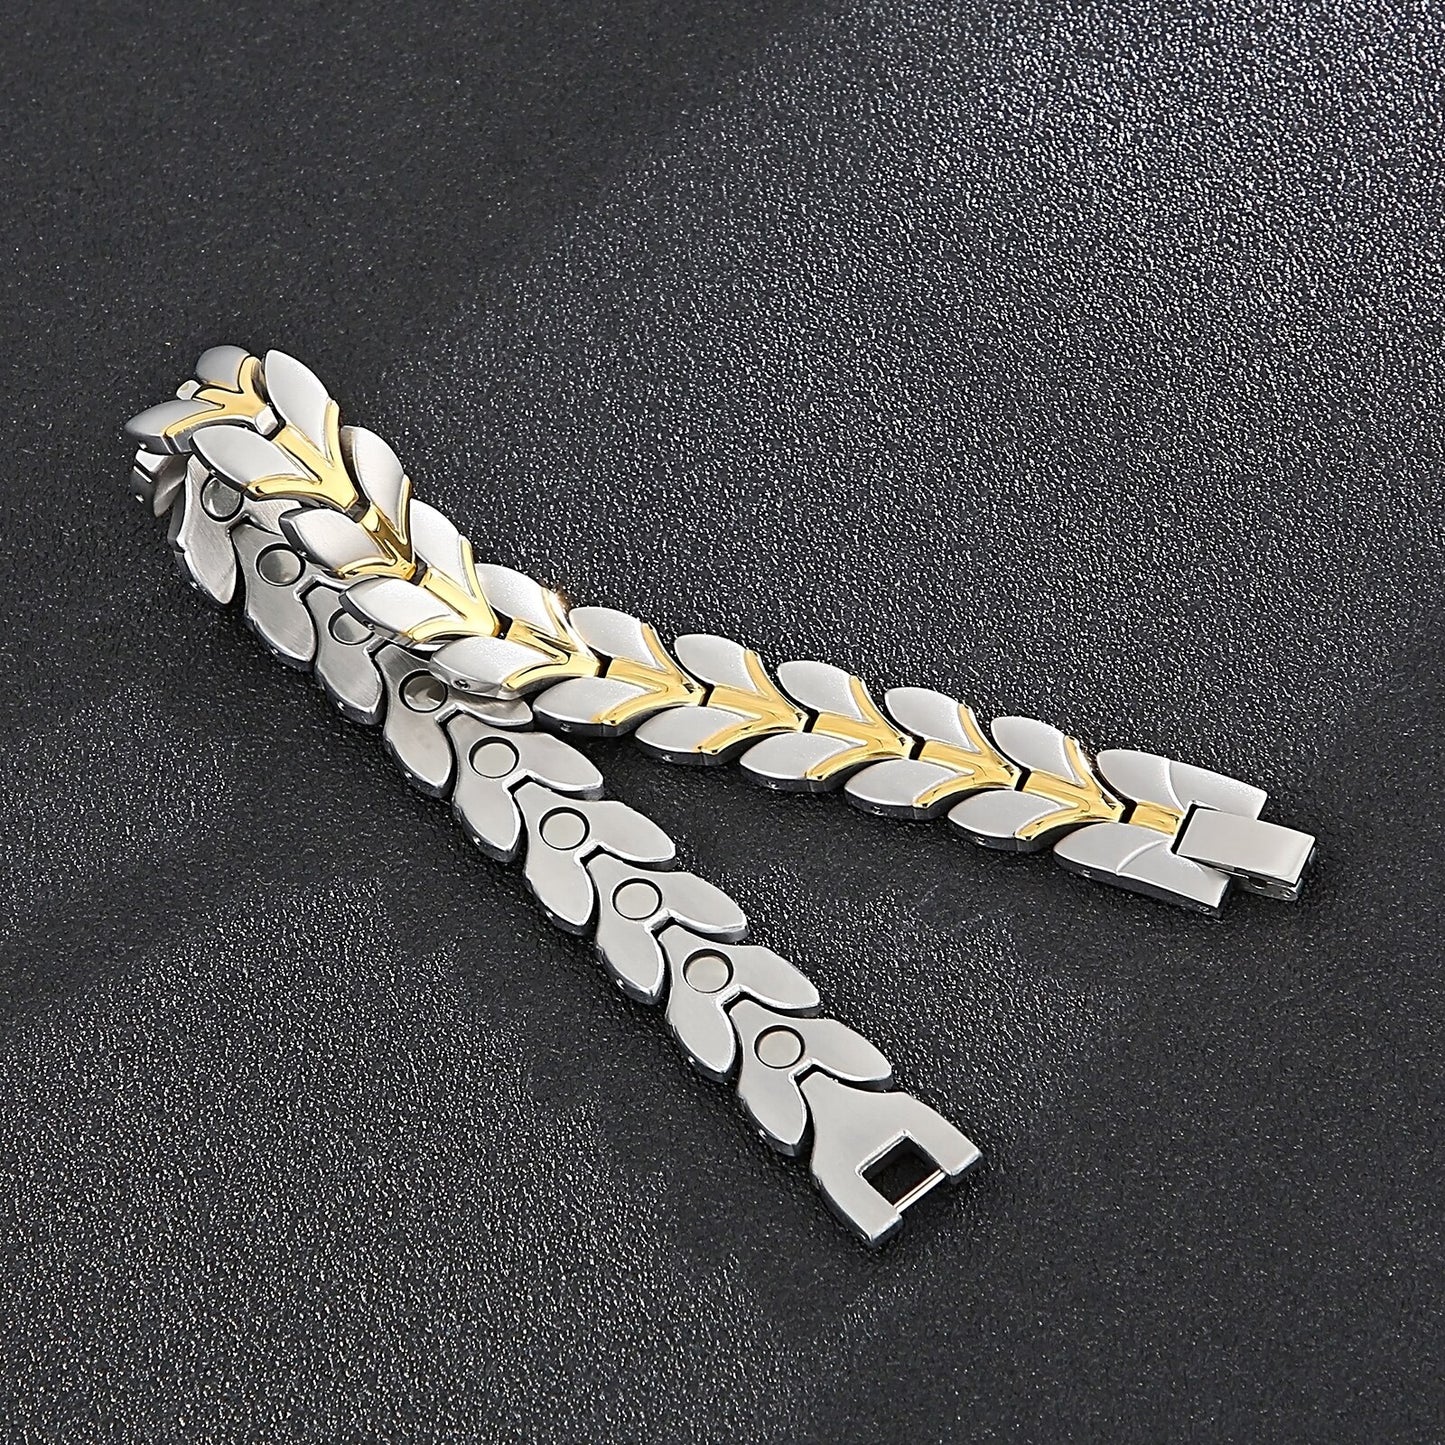 Magnetic Bracelets for Men Titanium Steel Therapy Health Chain Bracelet with Unique Line Charm Fashion Jewelry